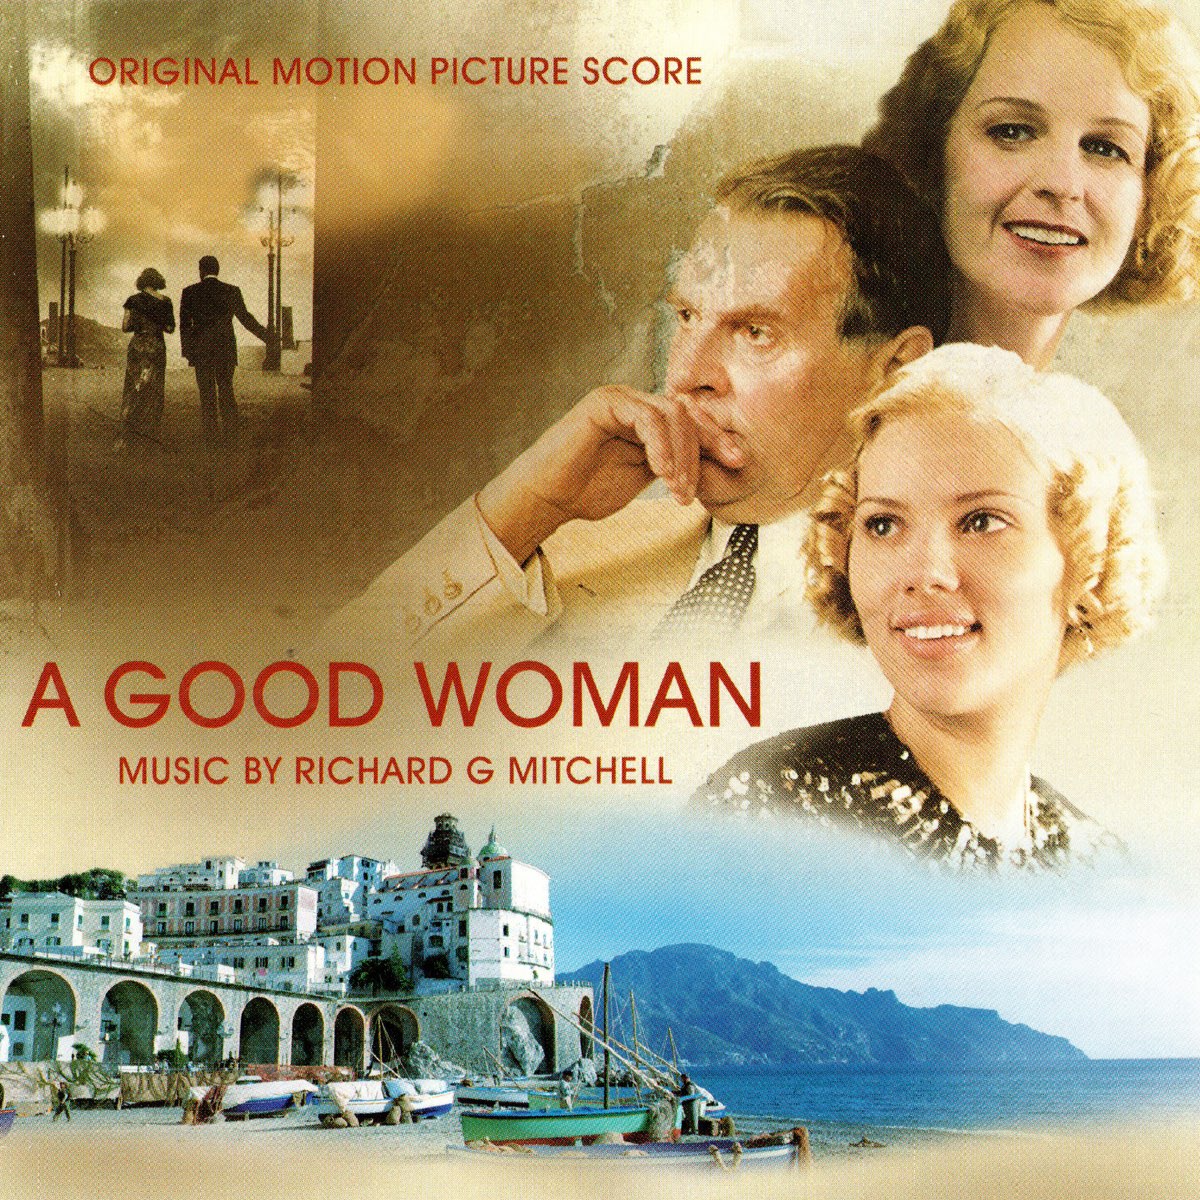 A Good Woman (Original Motion Picture Score) - Album by Richard G. Mitchell  - Apple Music